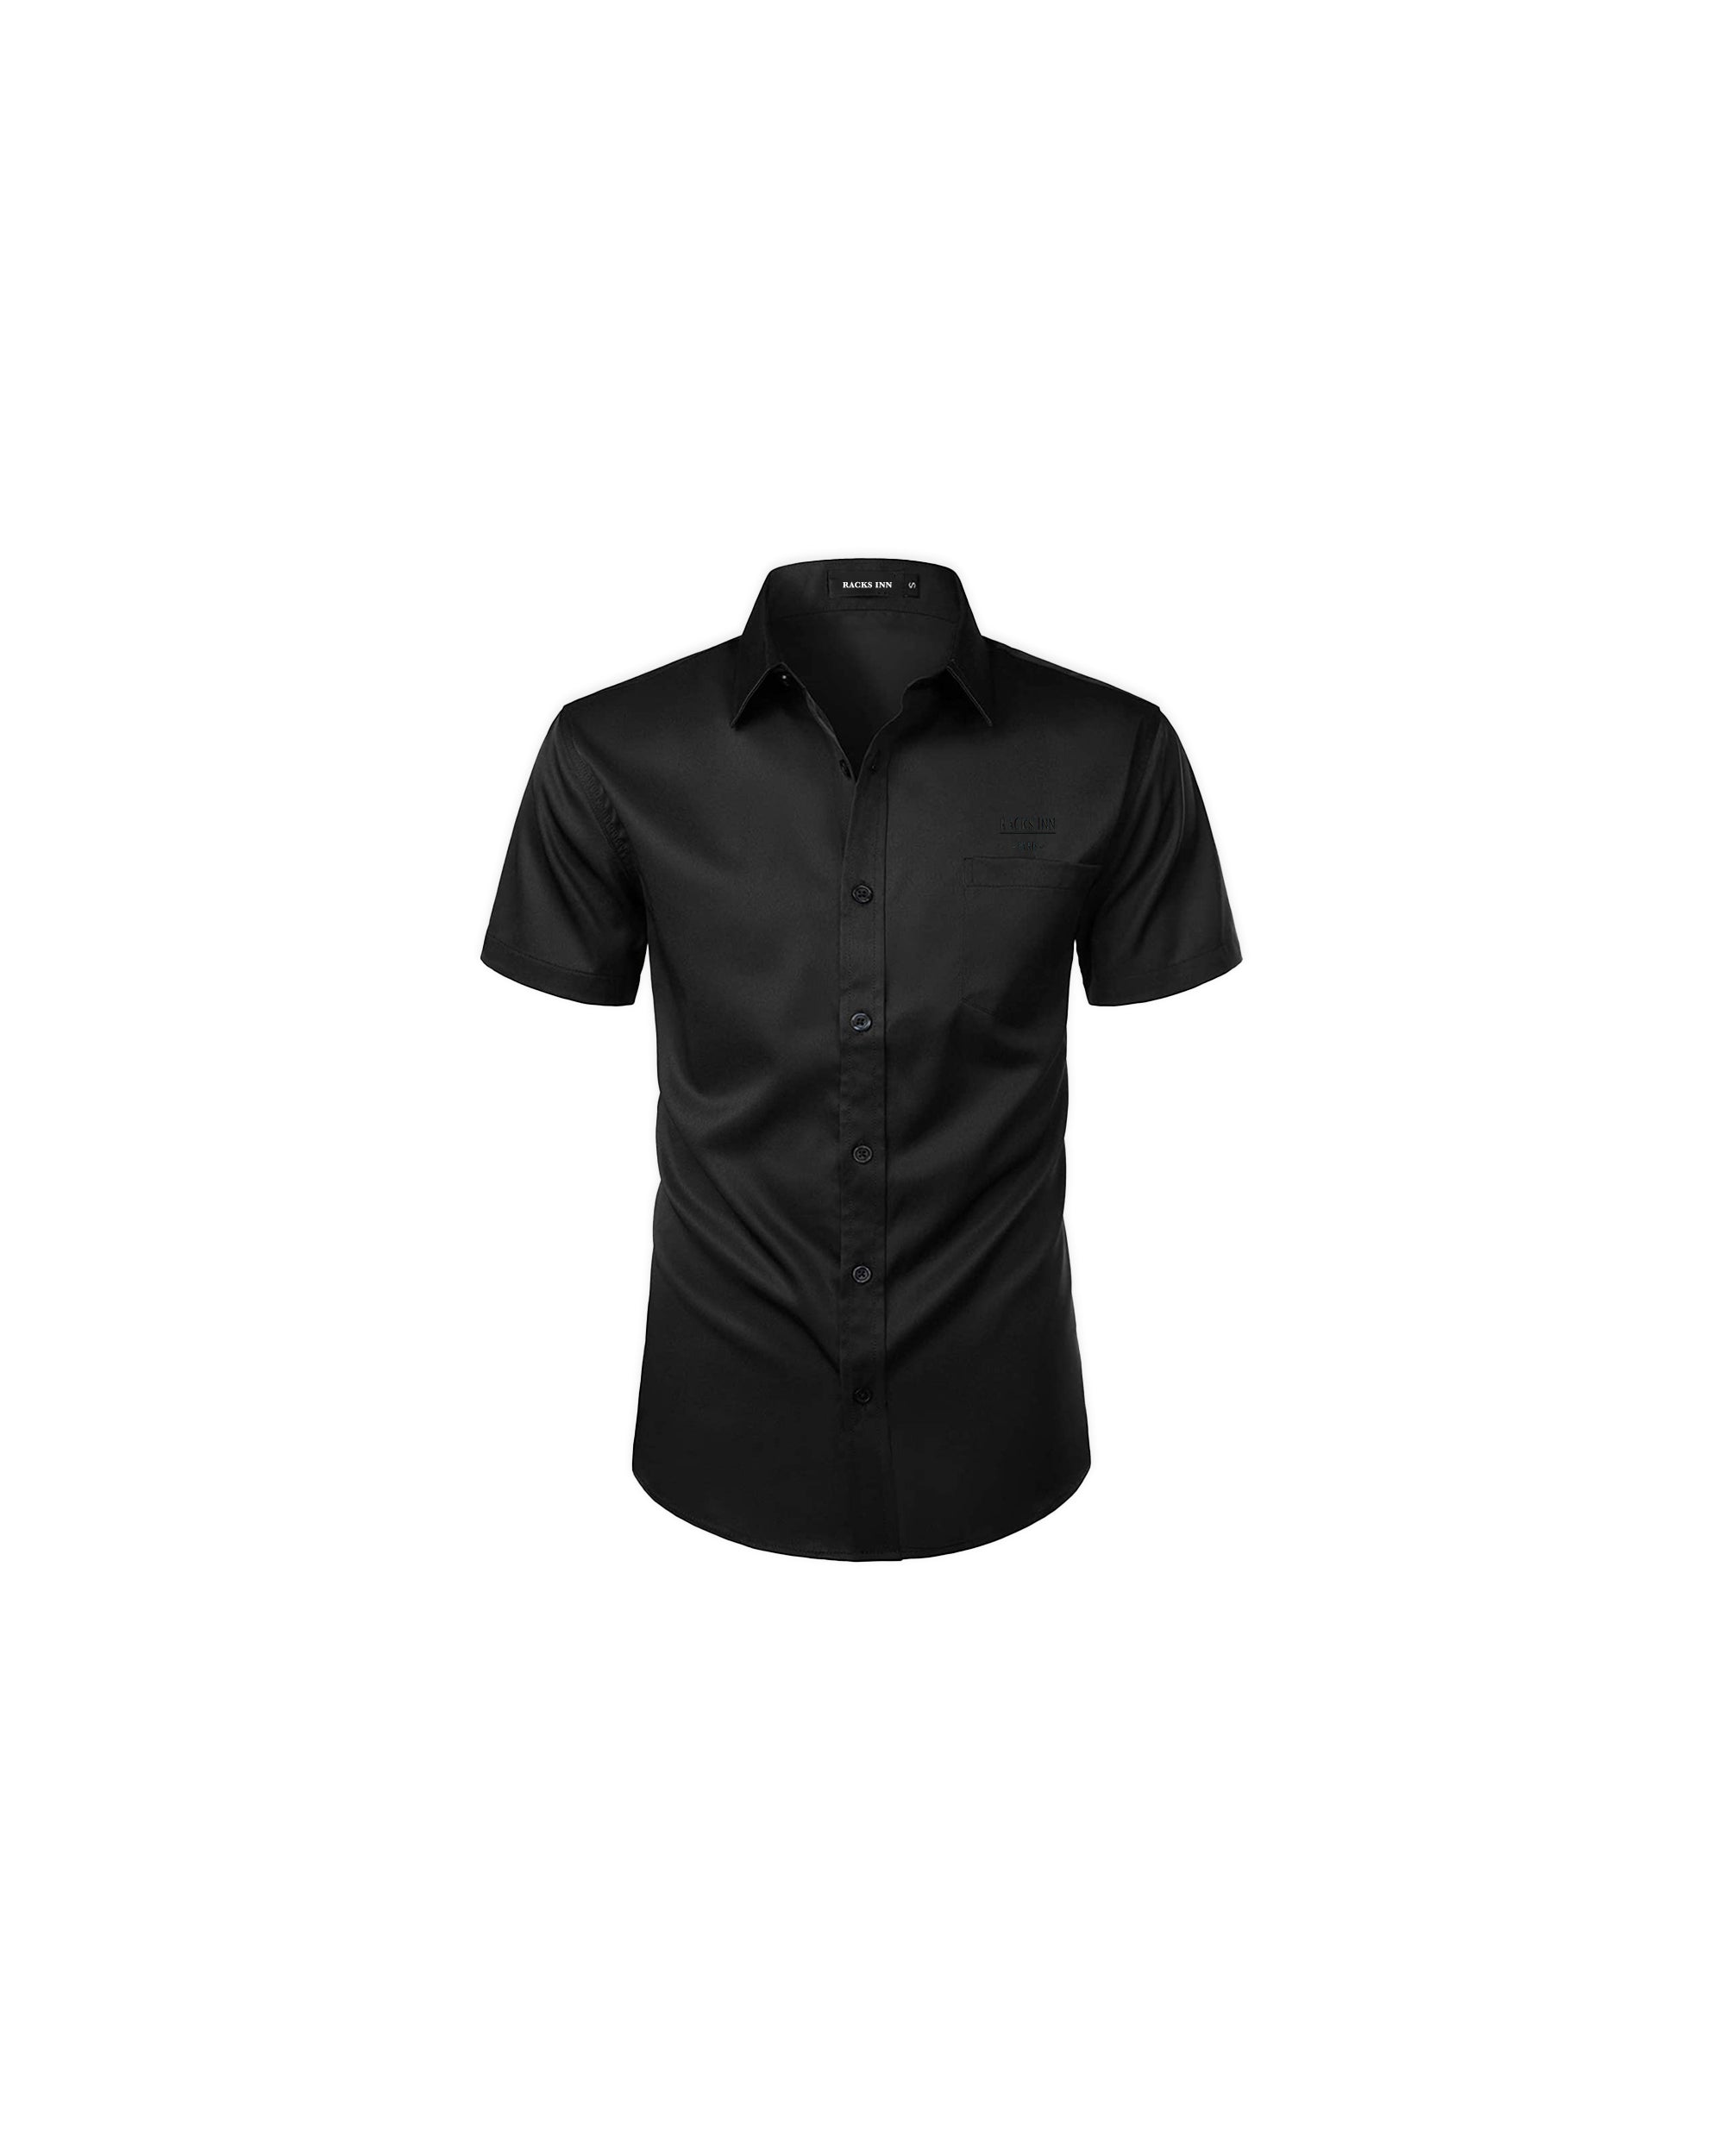 Paris Casual Shirt - All Black